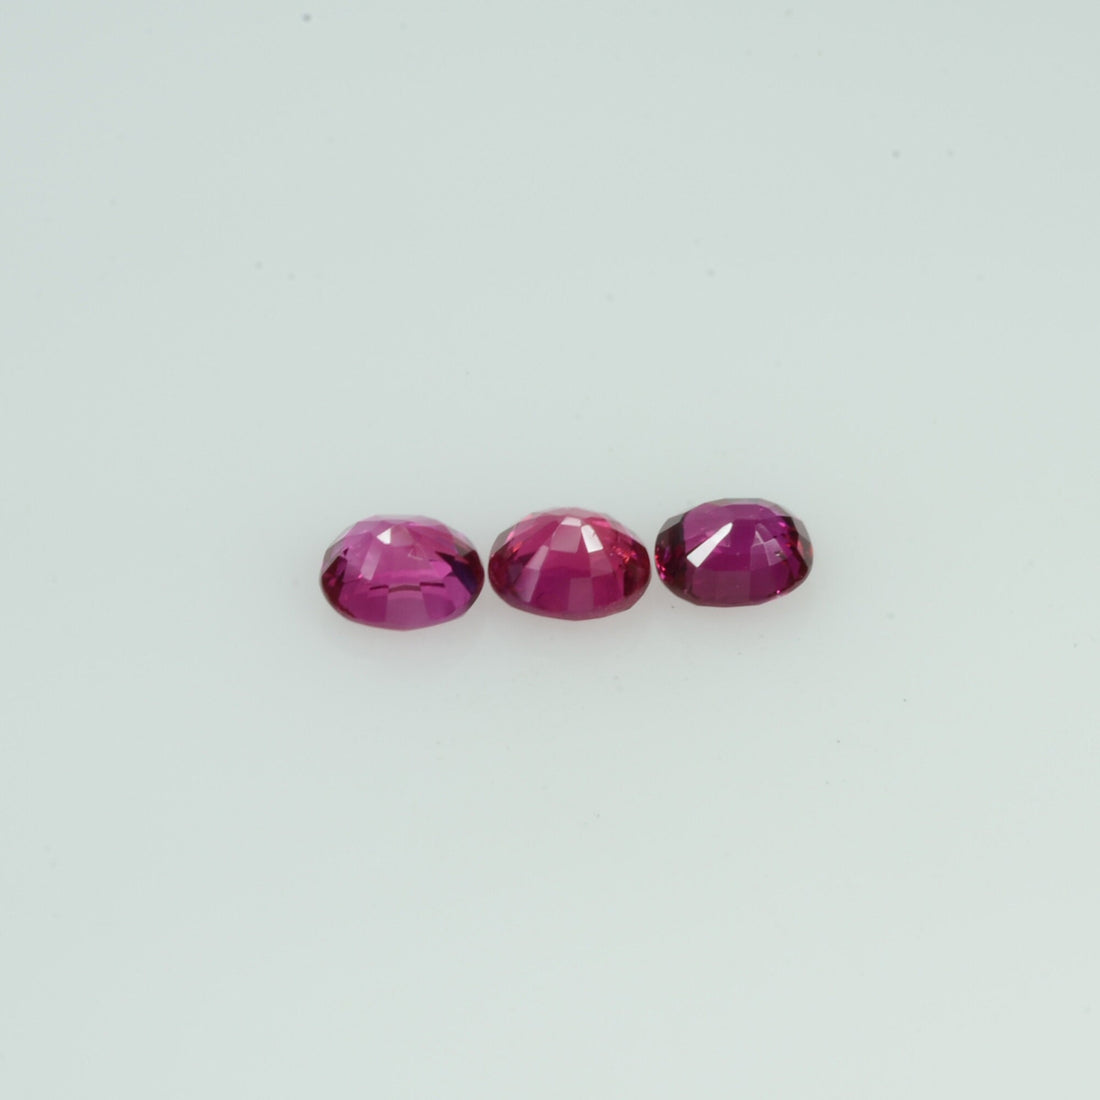 3.7x3 mm Natural Burma Ruby Loose Gemstone Oval Cut